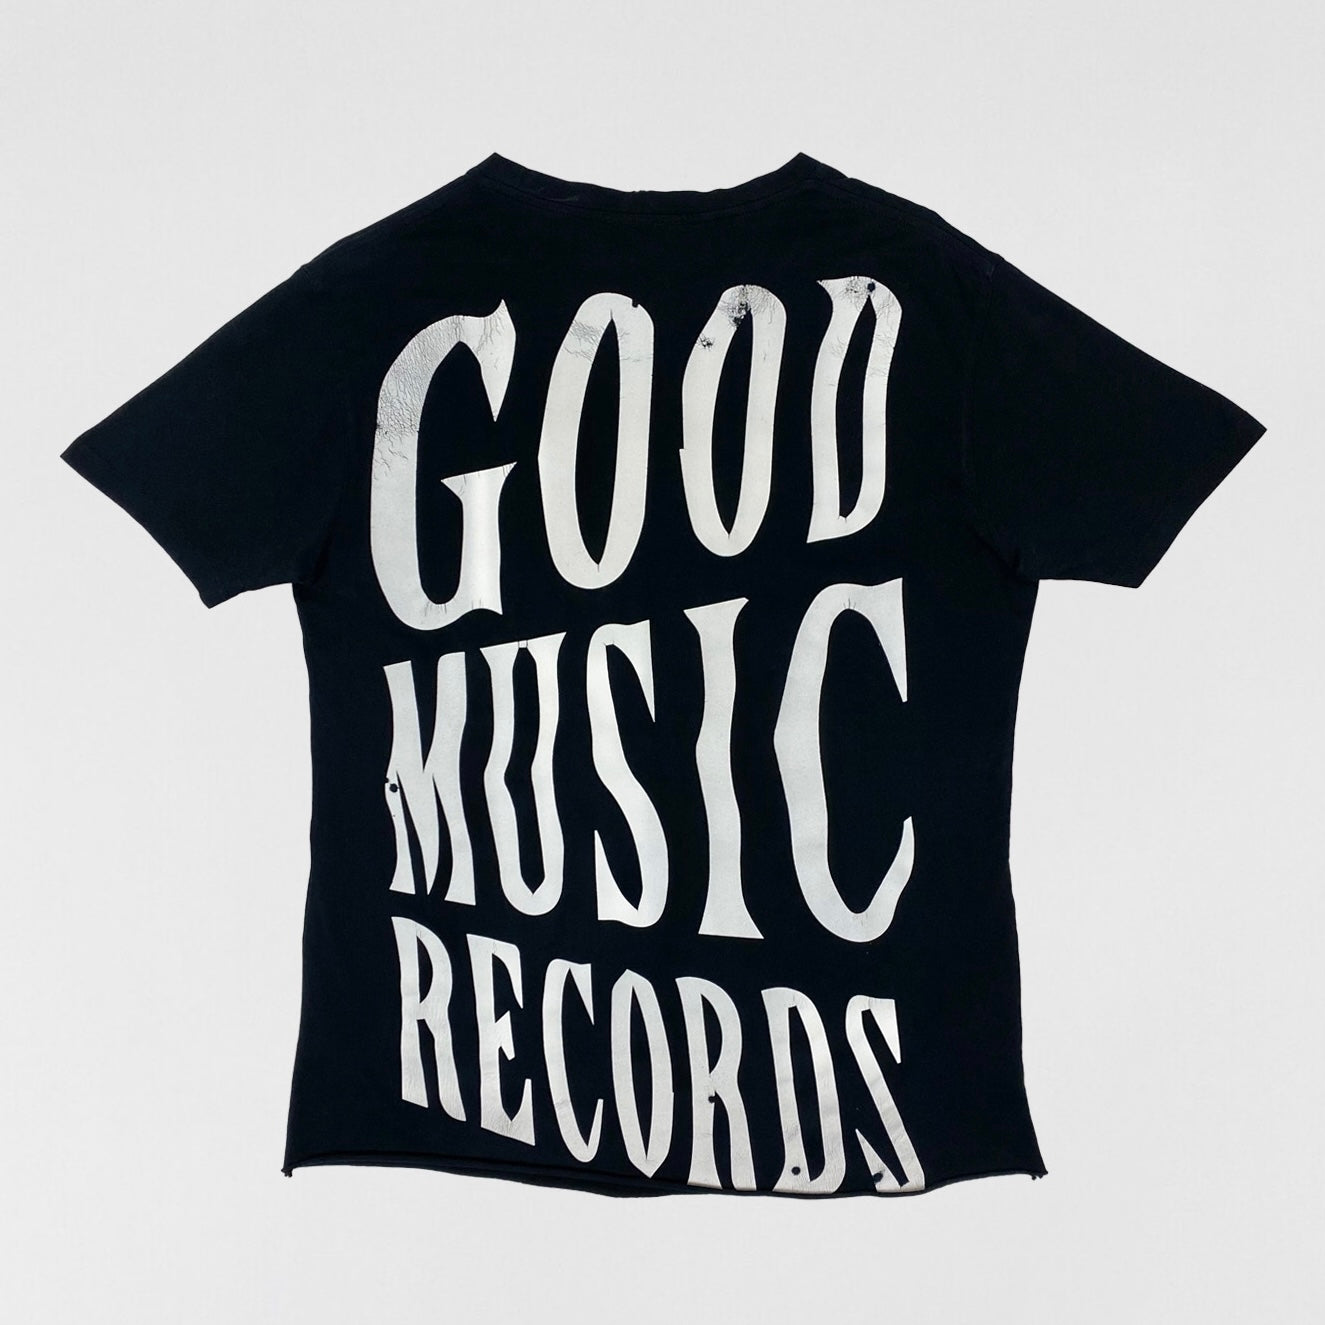 Good Music 2012 Record Label Tee